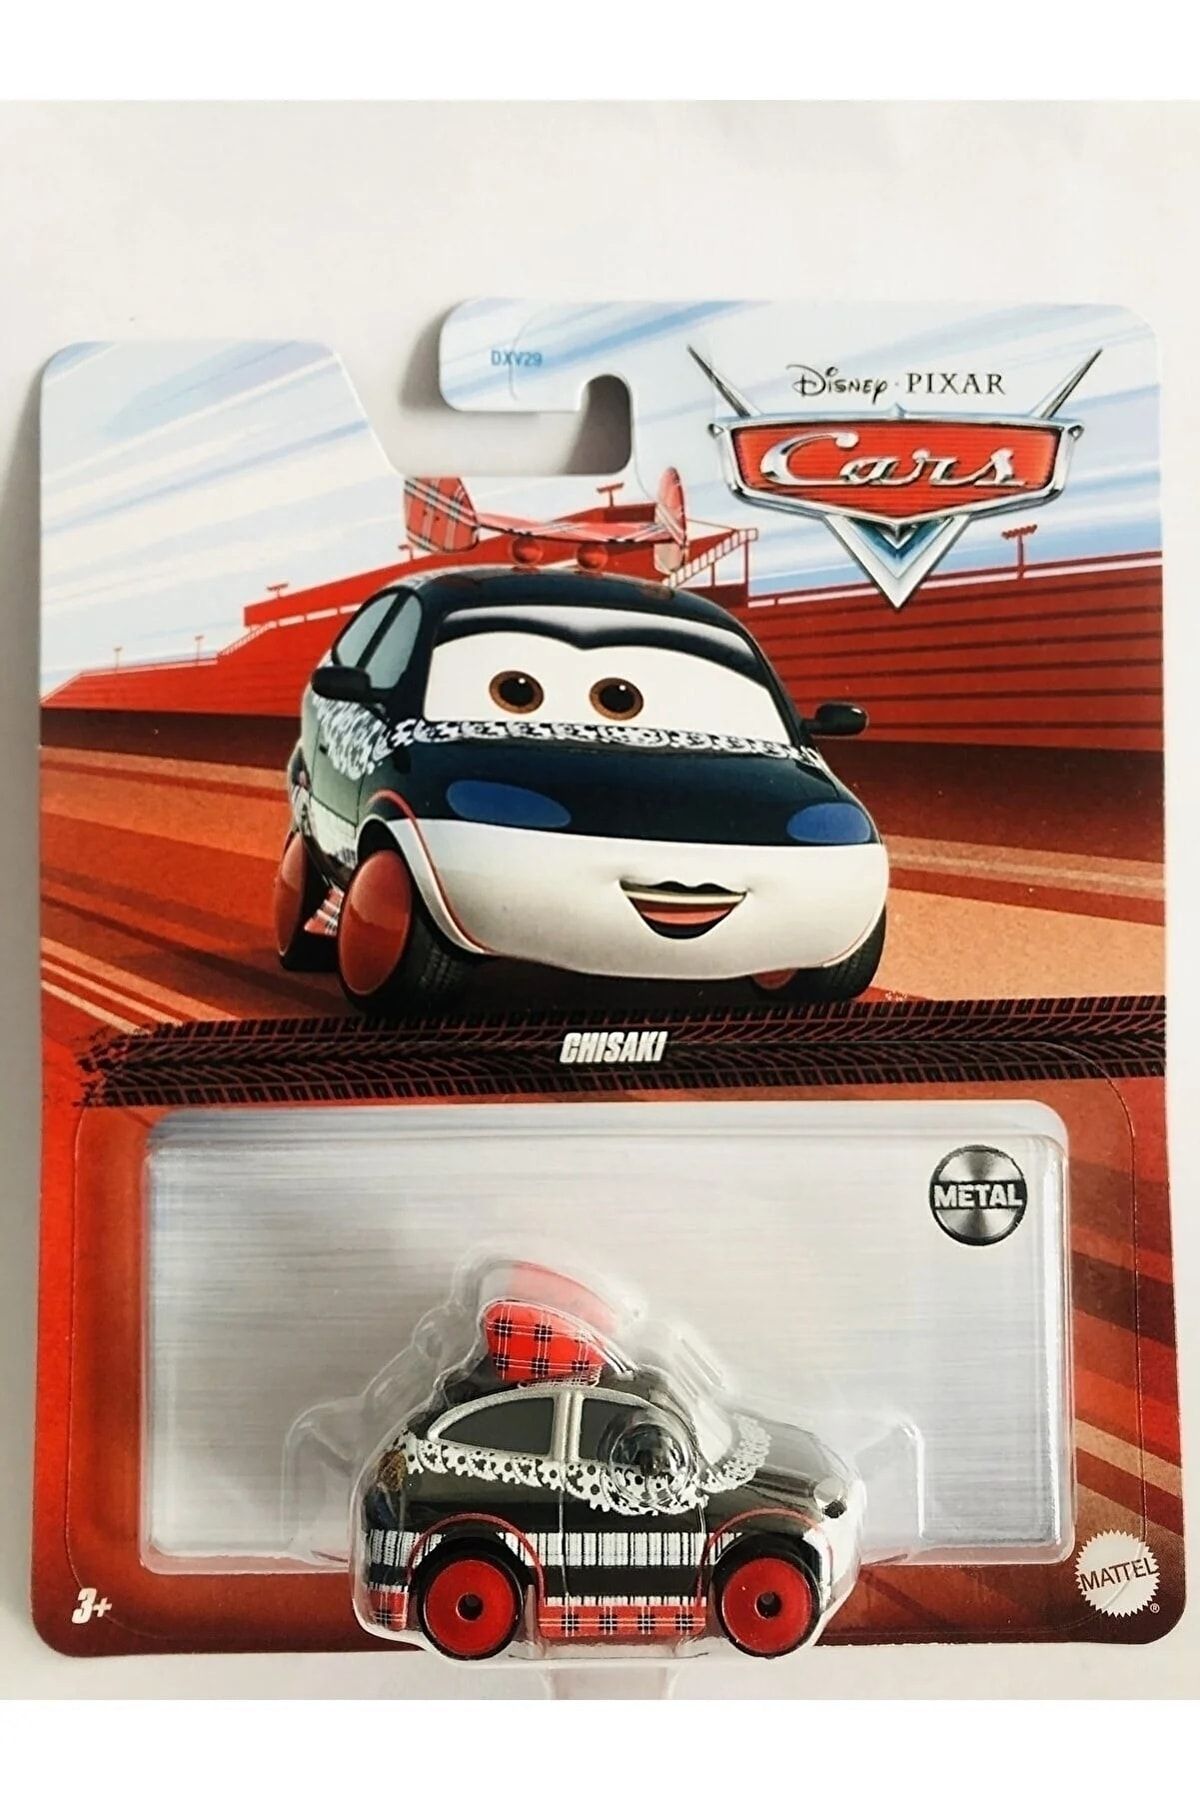 Mattel Disney Pixar Cars Chisaki